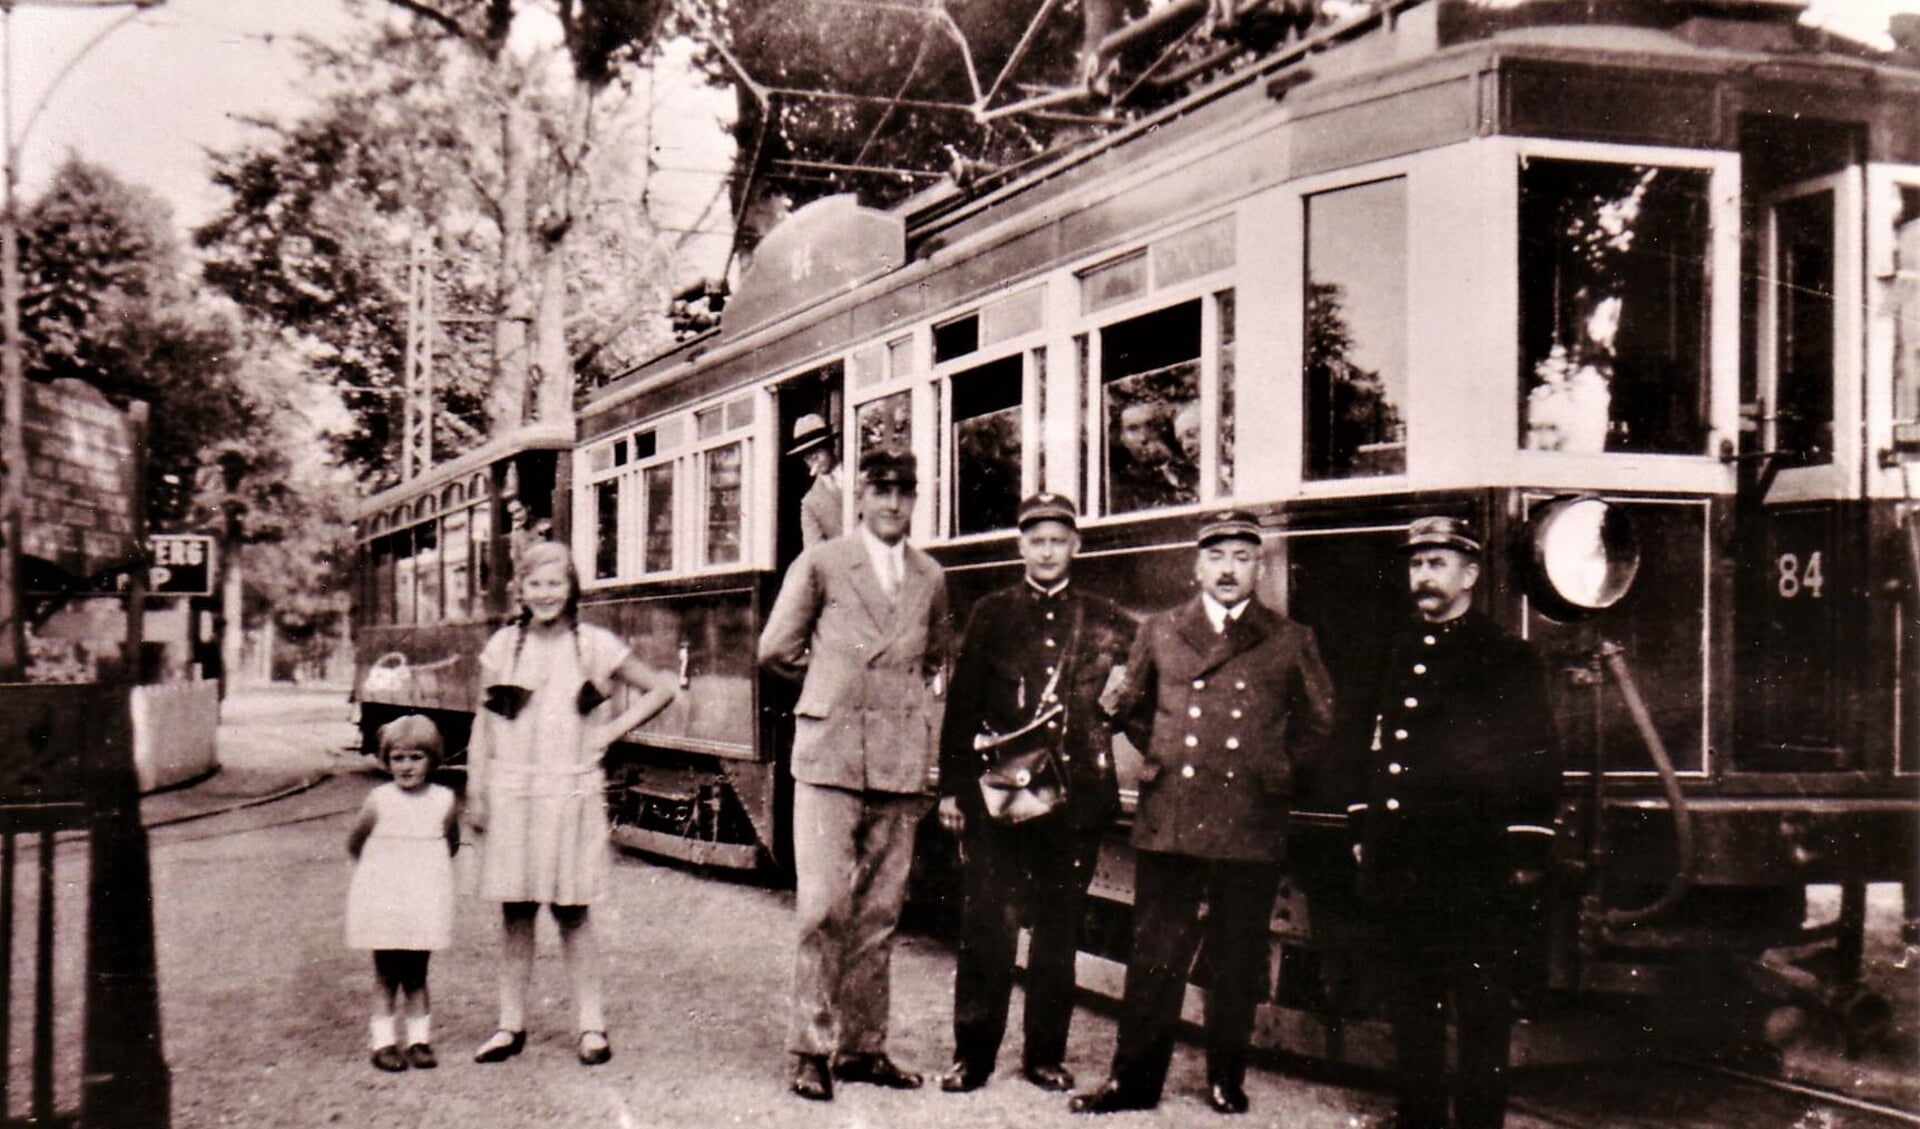 Poserend voor de tram die in 1949 in Soesterberg uit beeld verdween.